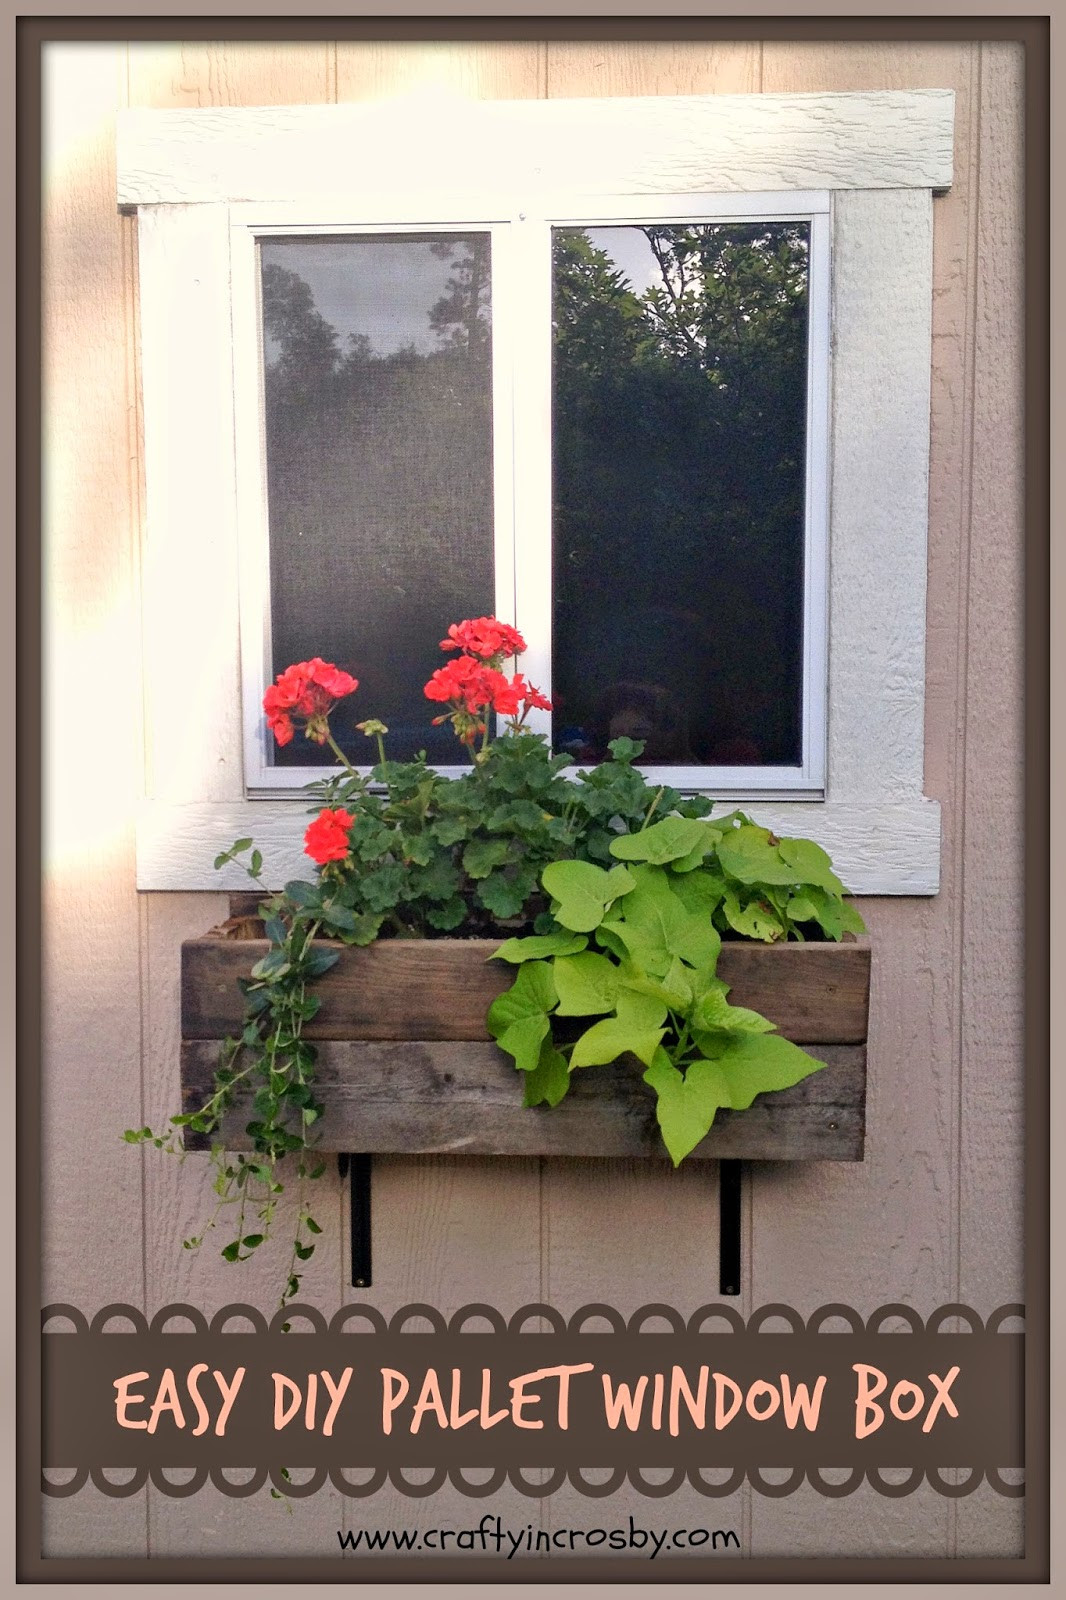 Best ideas about DIY Garden Window
. Save or Pin Crafty in Crosby Easy DIY Pallet Window Box Now.